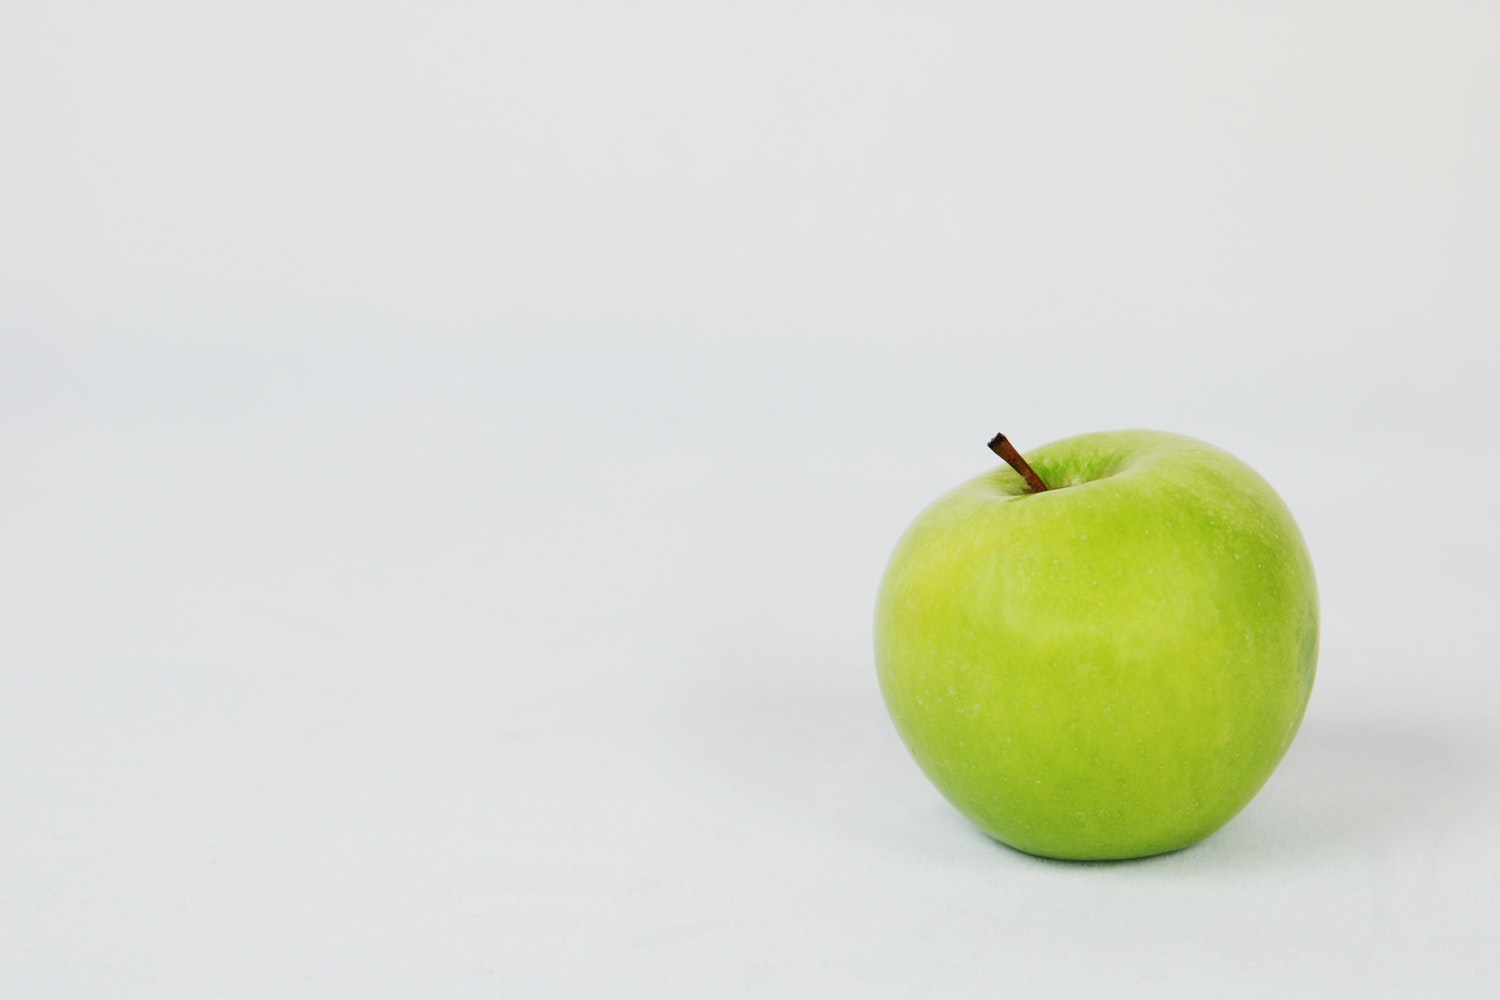 benefits of green apples